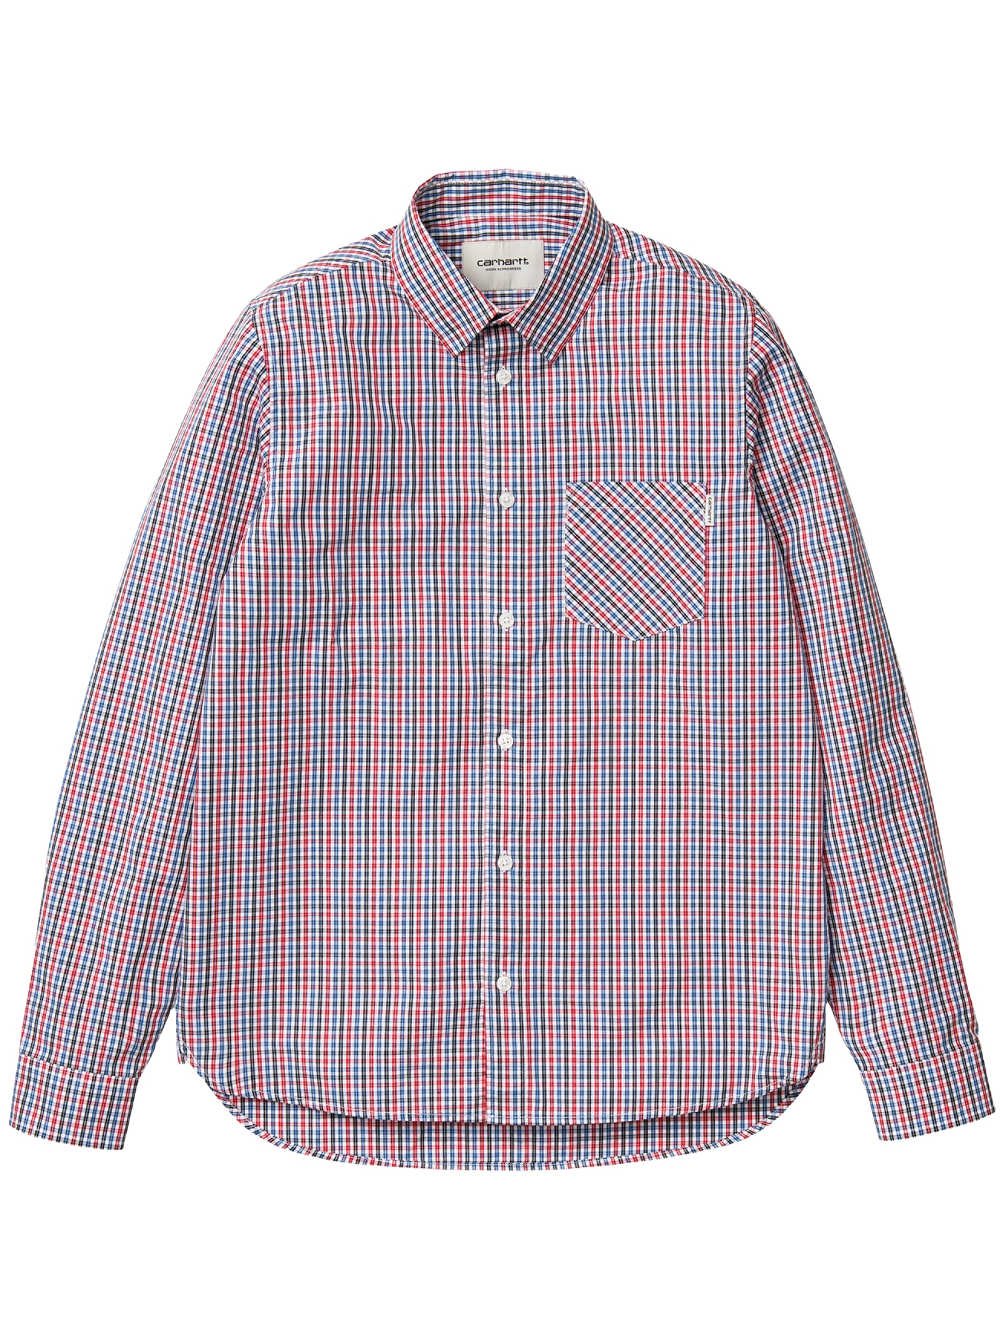 Carhartt Bass Shirt 22582 - Red Check - Camicia Uomo XL